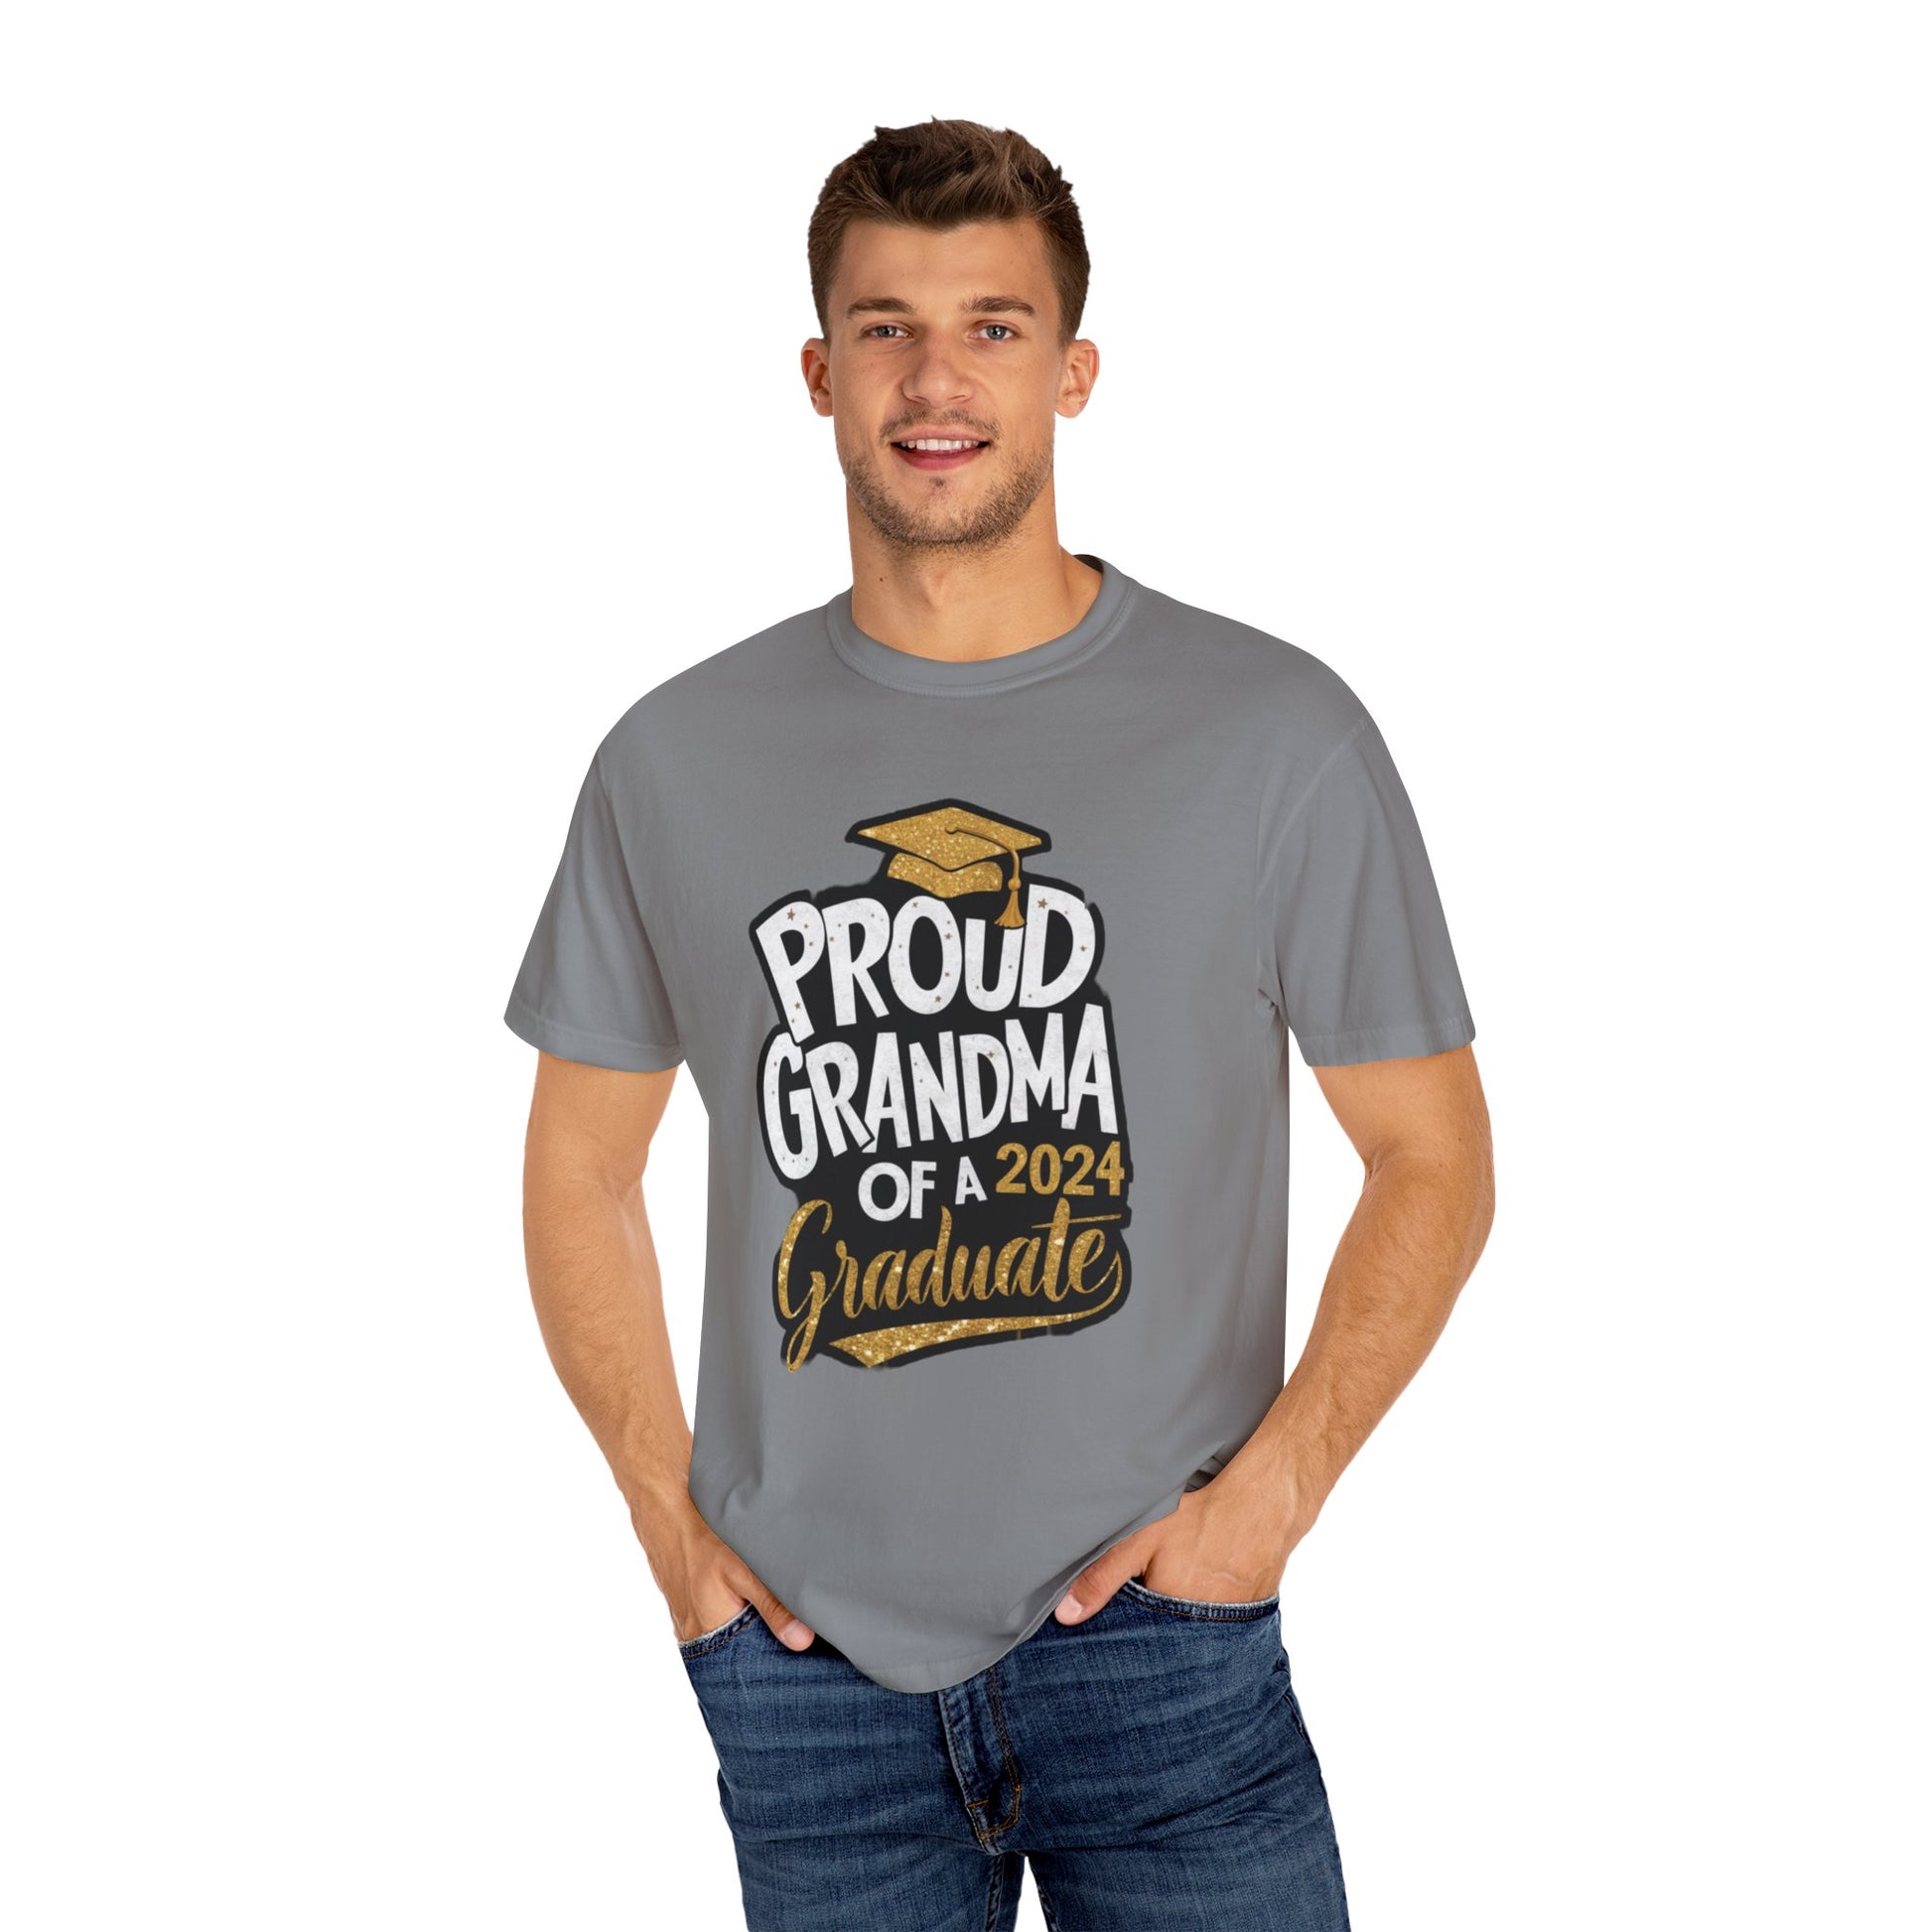 Proud of Grandma 2024 Graduate Unisex Garment-dyed T-shirt Cotton Funny Humorous Graphic Soft Premium Unisex Men Women Grey T-shirt Birthday Gift-42